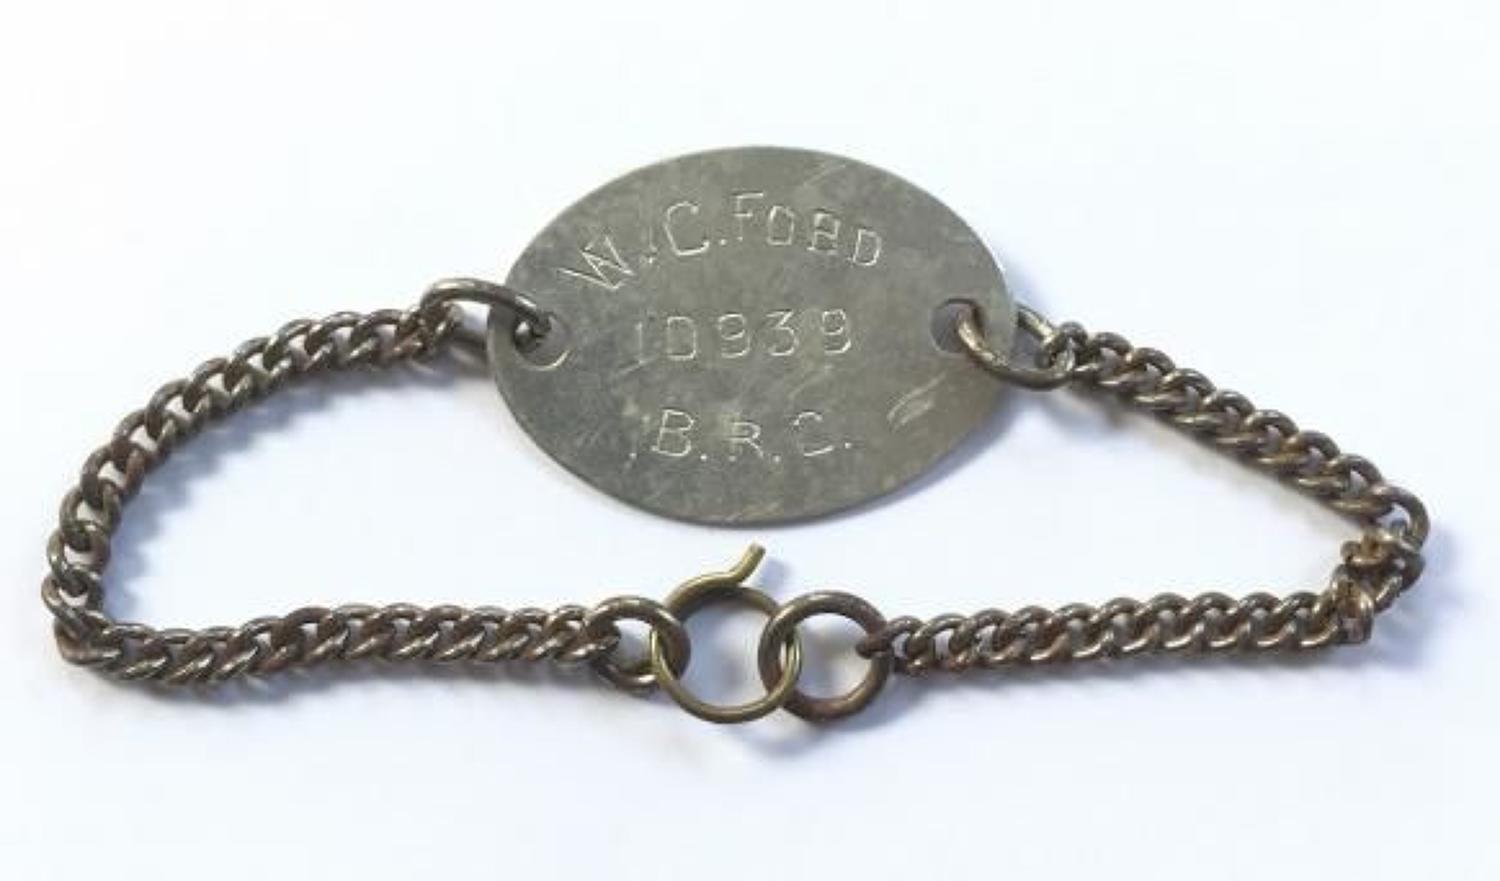 WW1 British Red Cross Drivers ID Bracelet.